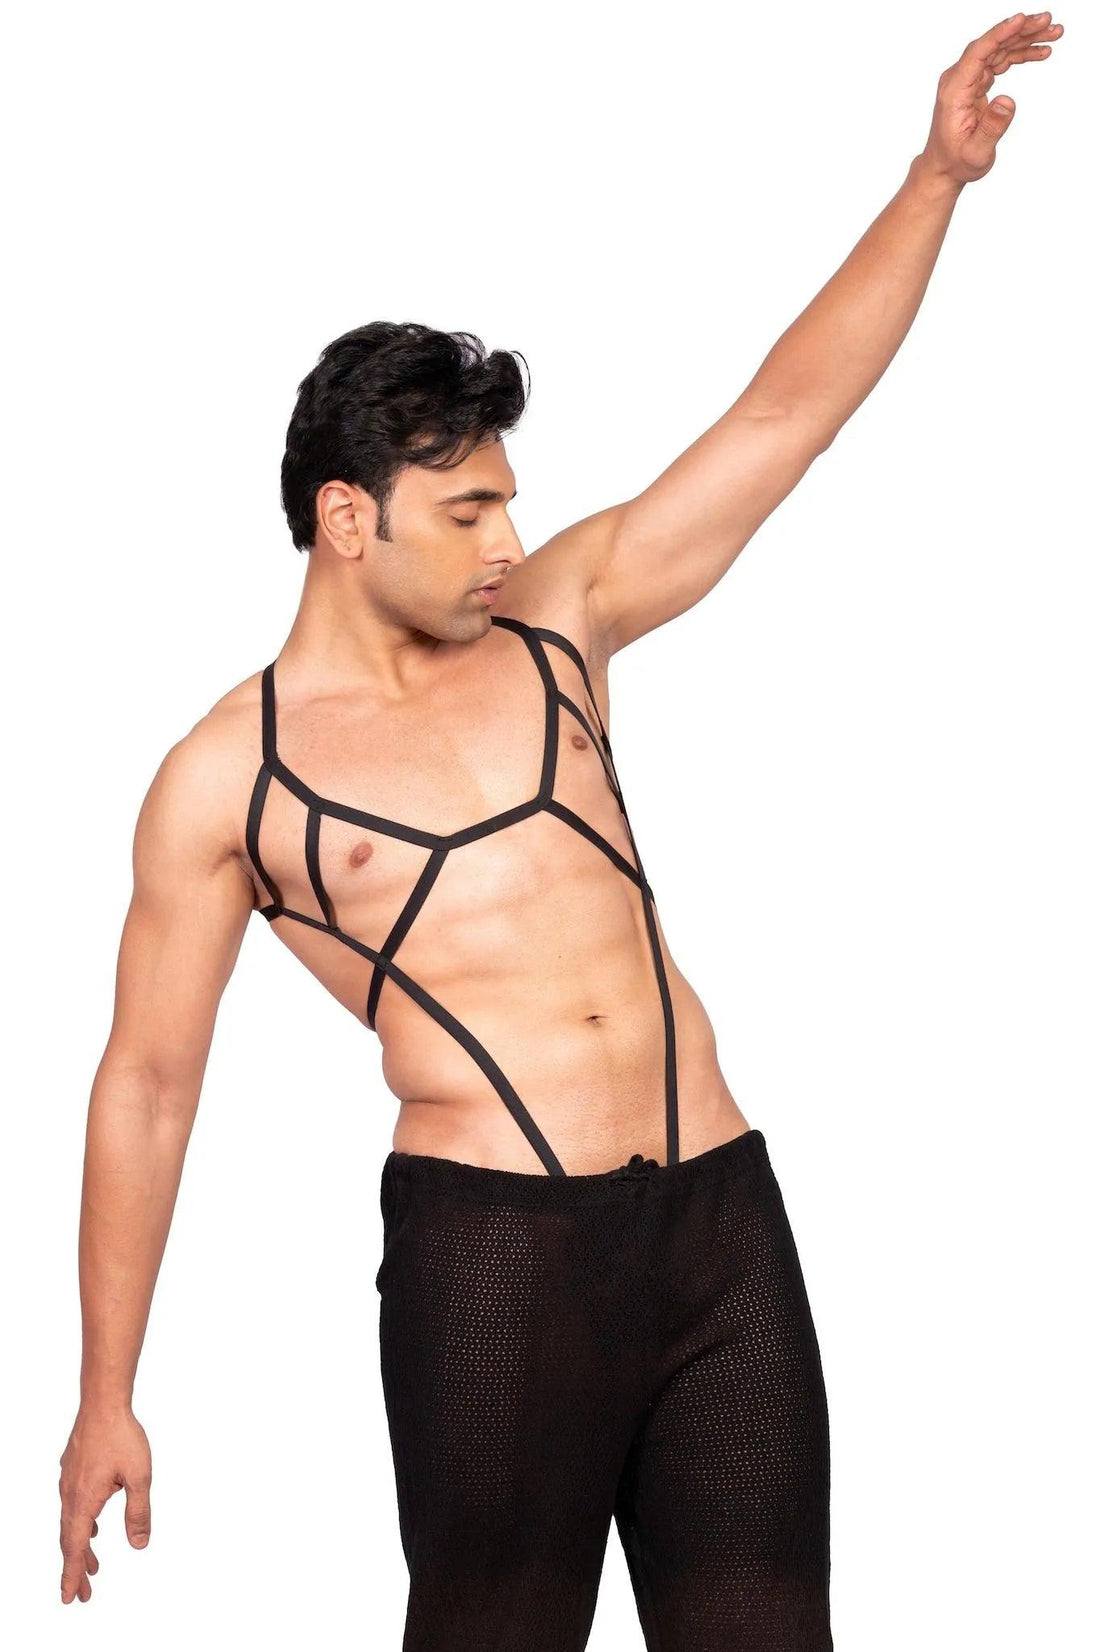 Body Harness - Accessory - Spider Suit - Black - Erobold - 